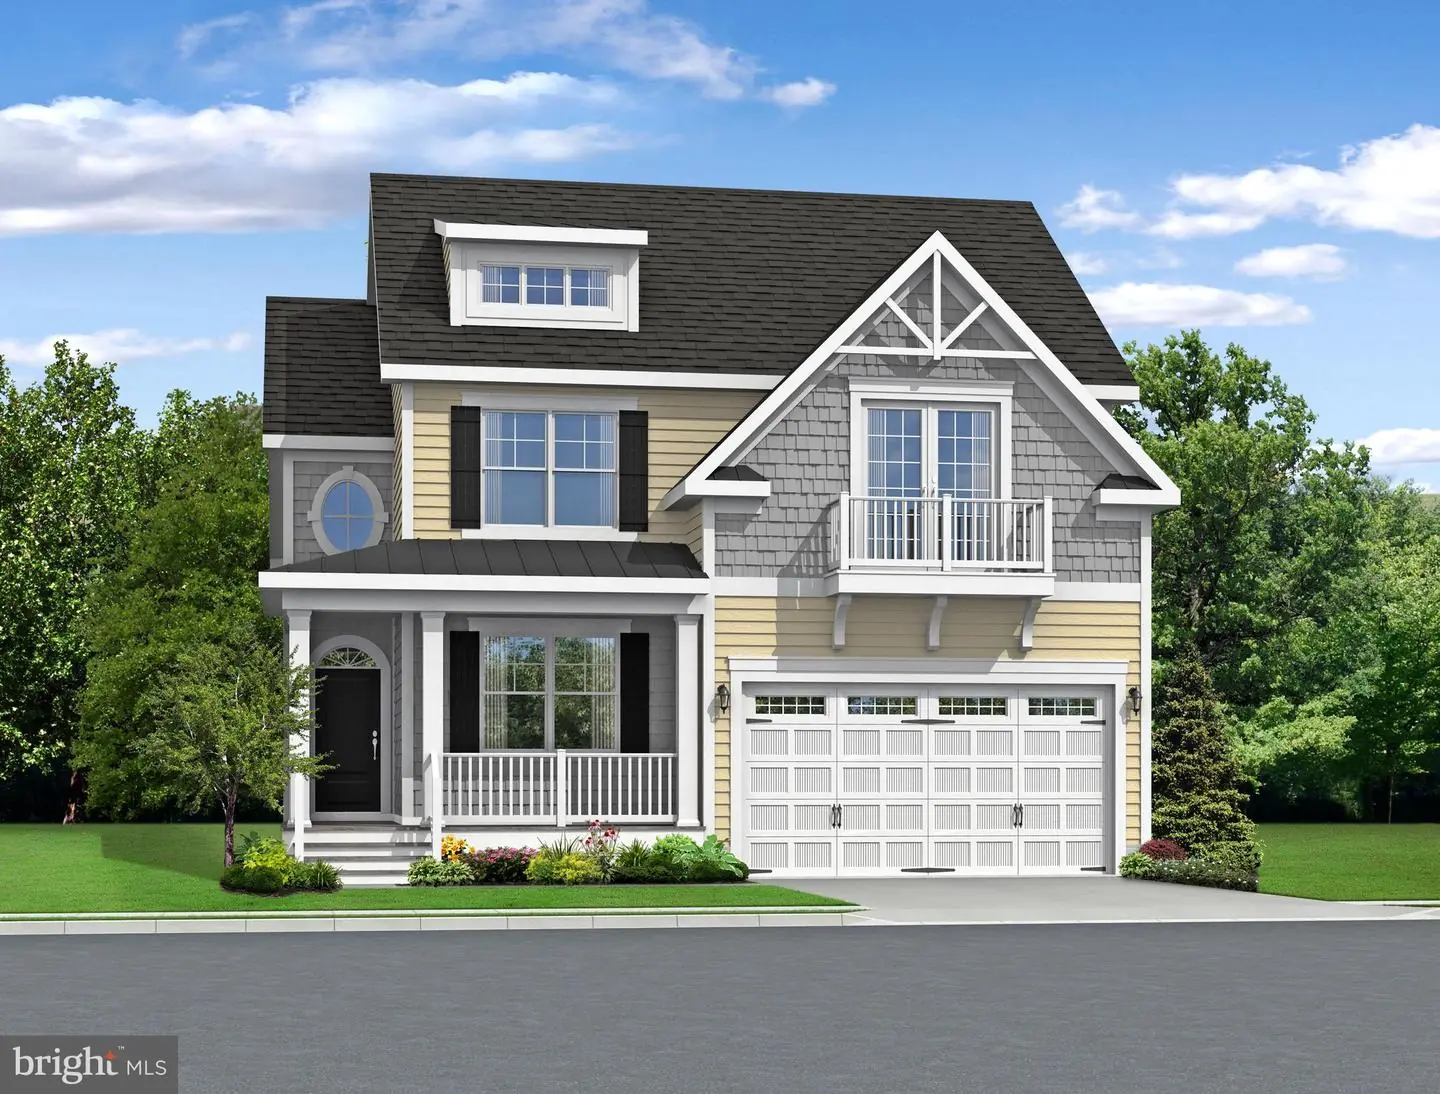 DESU2031440-801988062252-2022-11-02-11-01-29 Iris To-be-built Home Tbd | Millsboro, DE Real Estate For Sale | MLS# Desu2031440  - David T. King Realtor